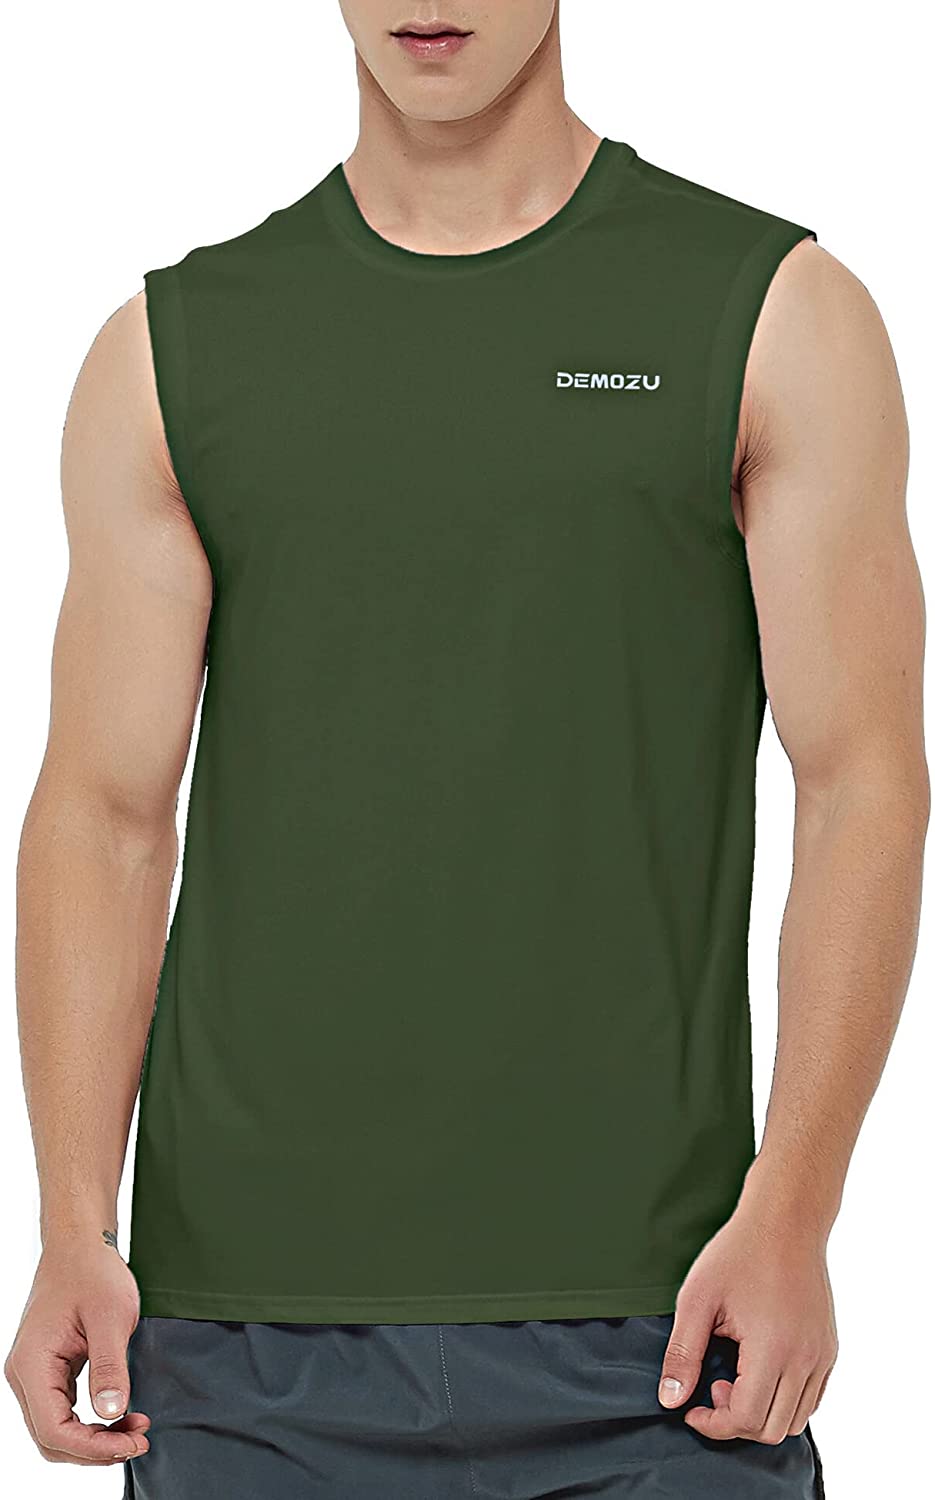 DEMOZU Men's Sleeveless Workout Shirt Swim Beach Tank Top